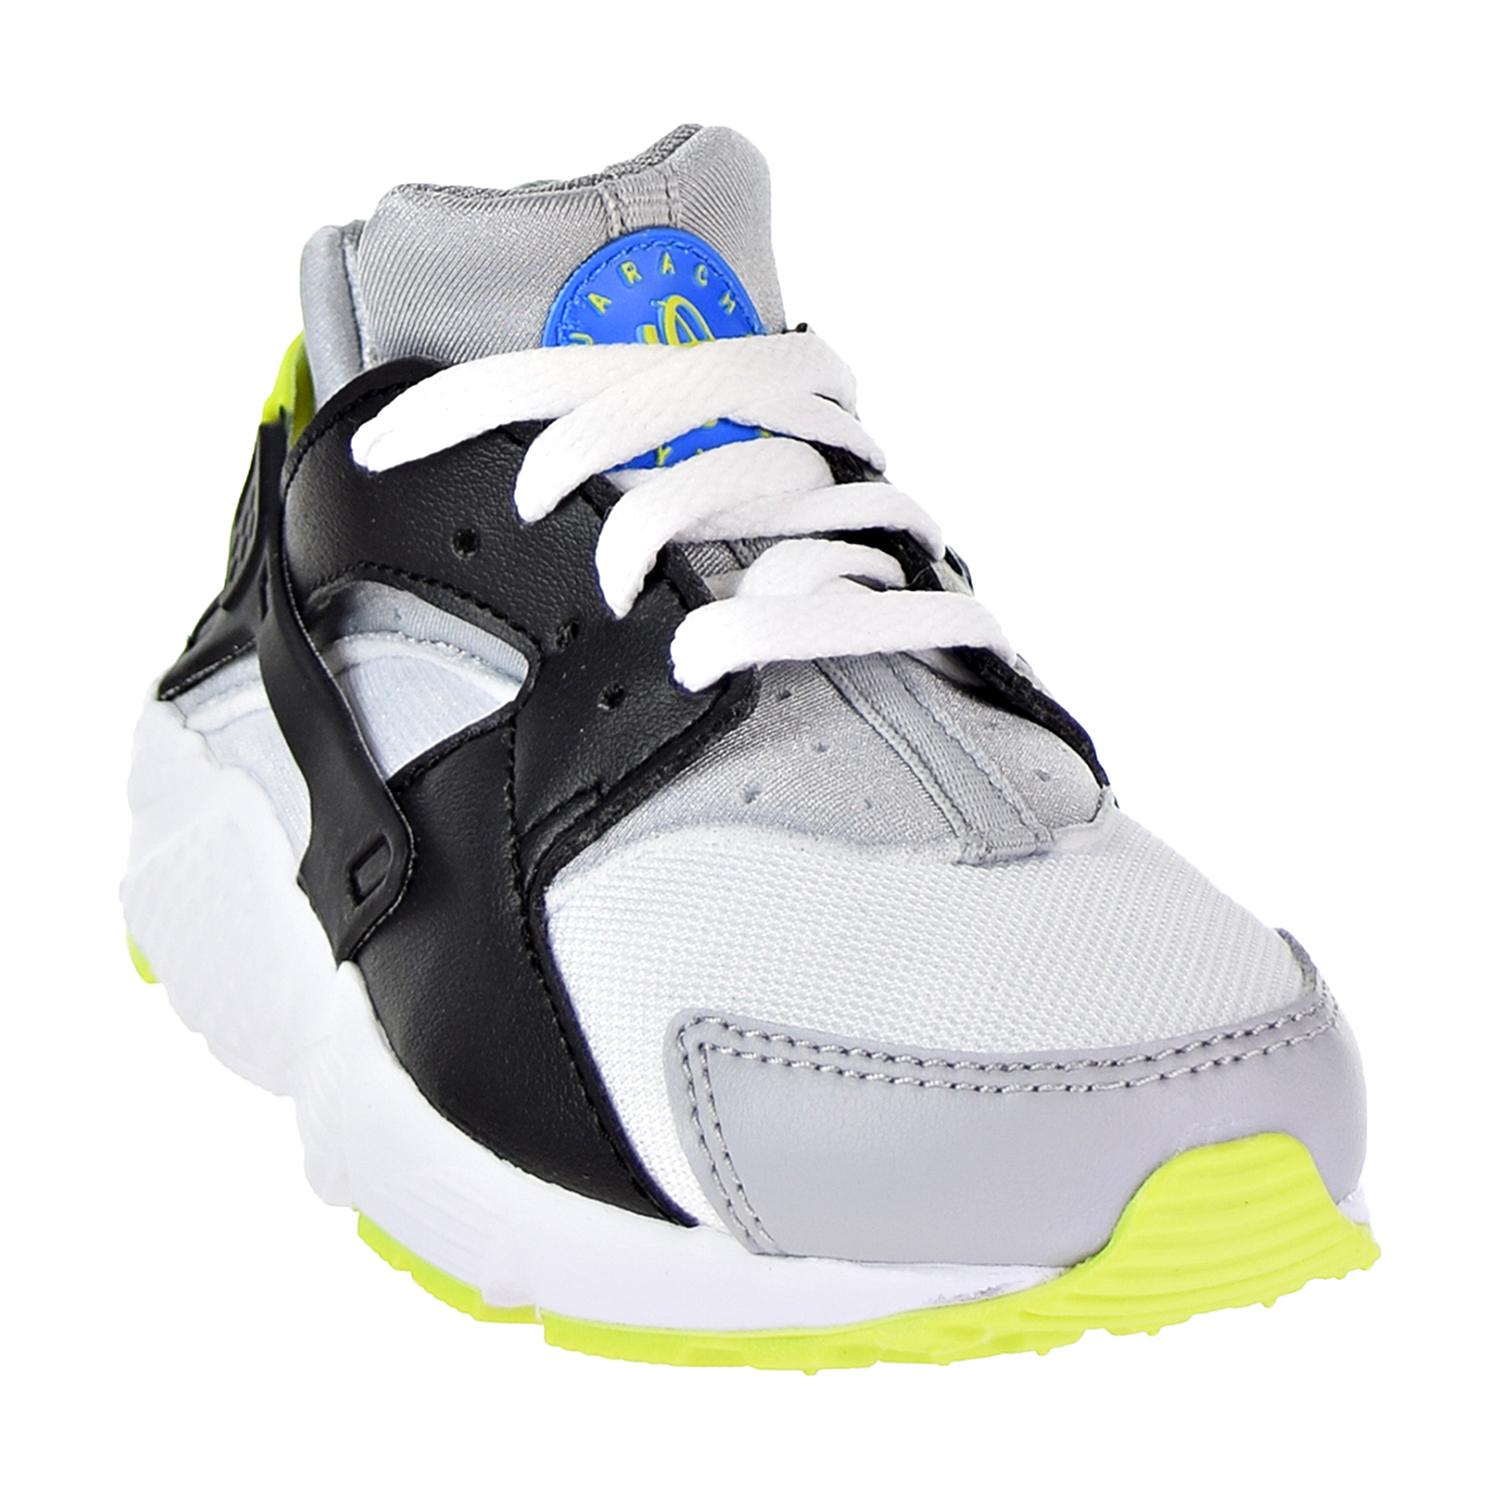 Nike Huarache Little Kid's Running Shoes University White/Cyber/Photo Blue 704949-112 - image 2 of 6